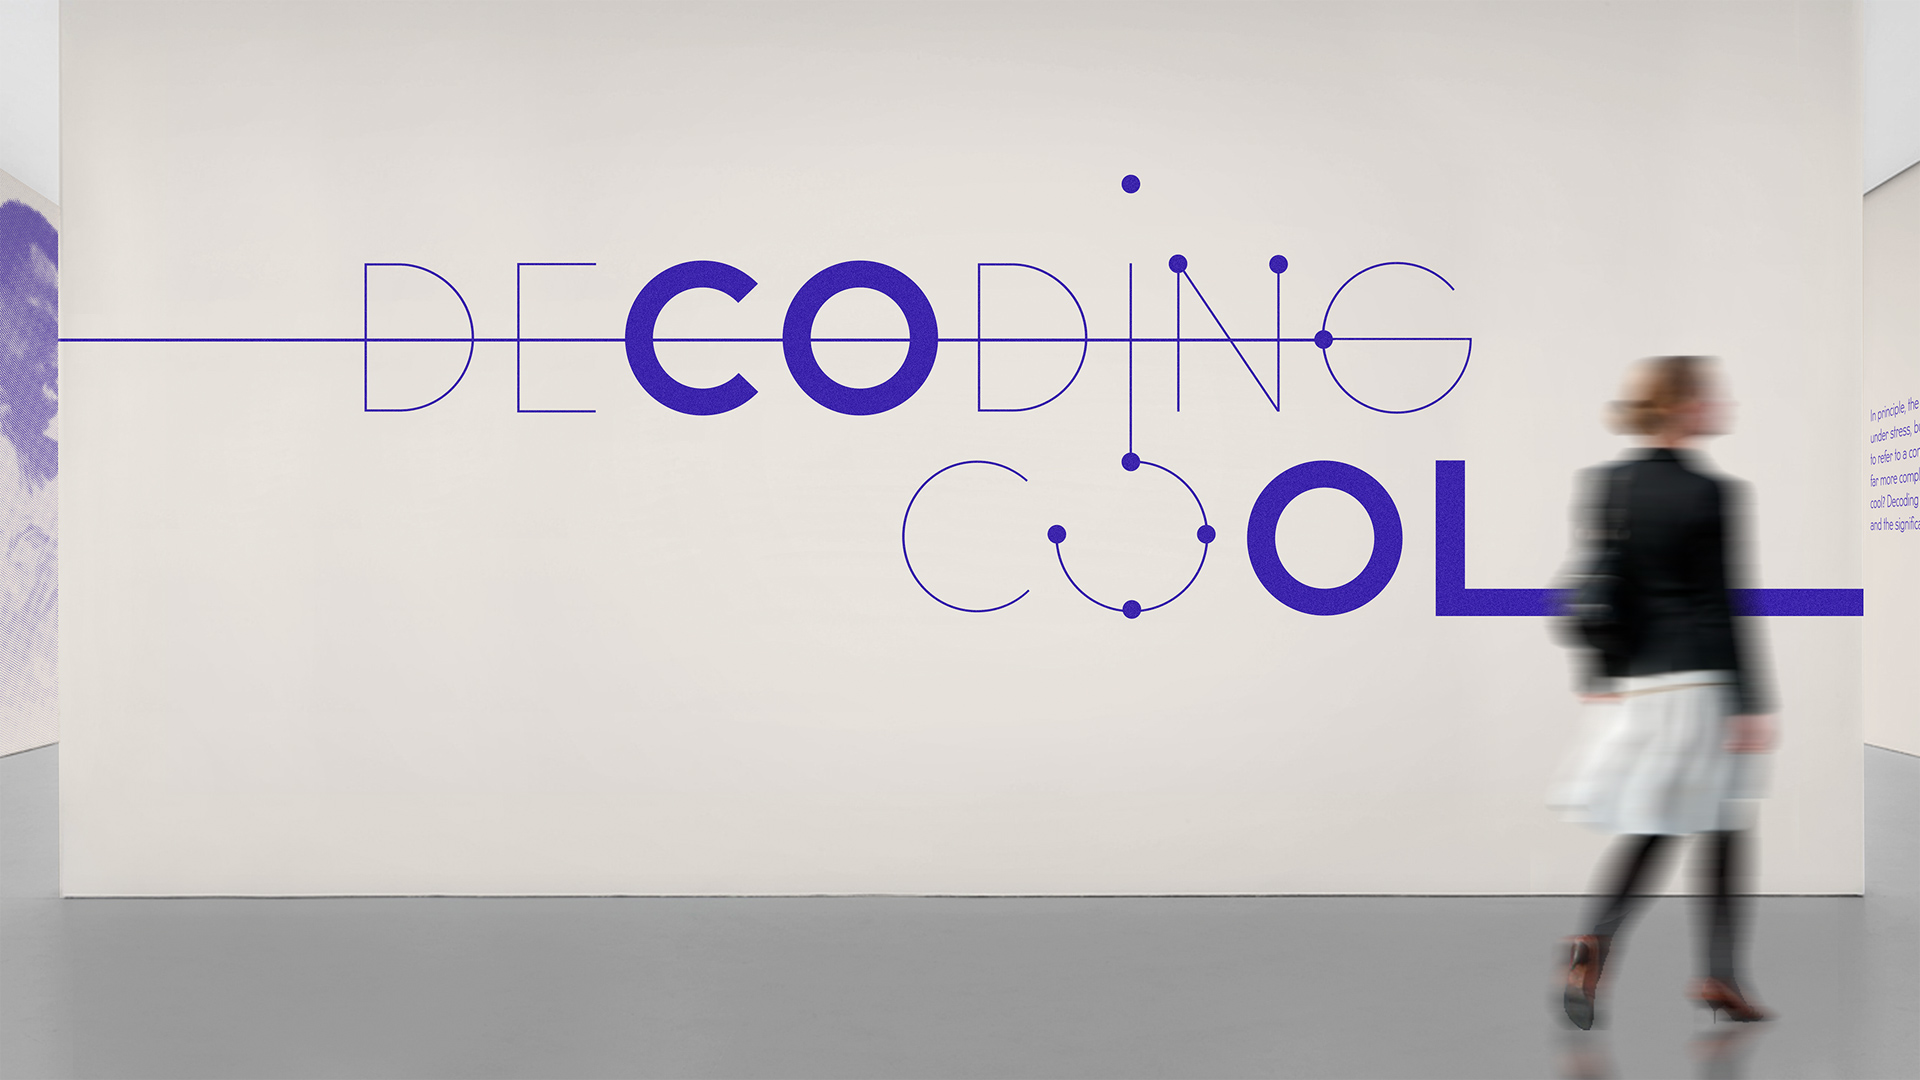 pamella-pinard--decoding-cool--graphic-design-merit--2018-adcc-student-competition1.jpg